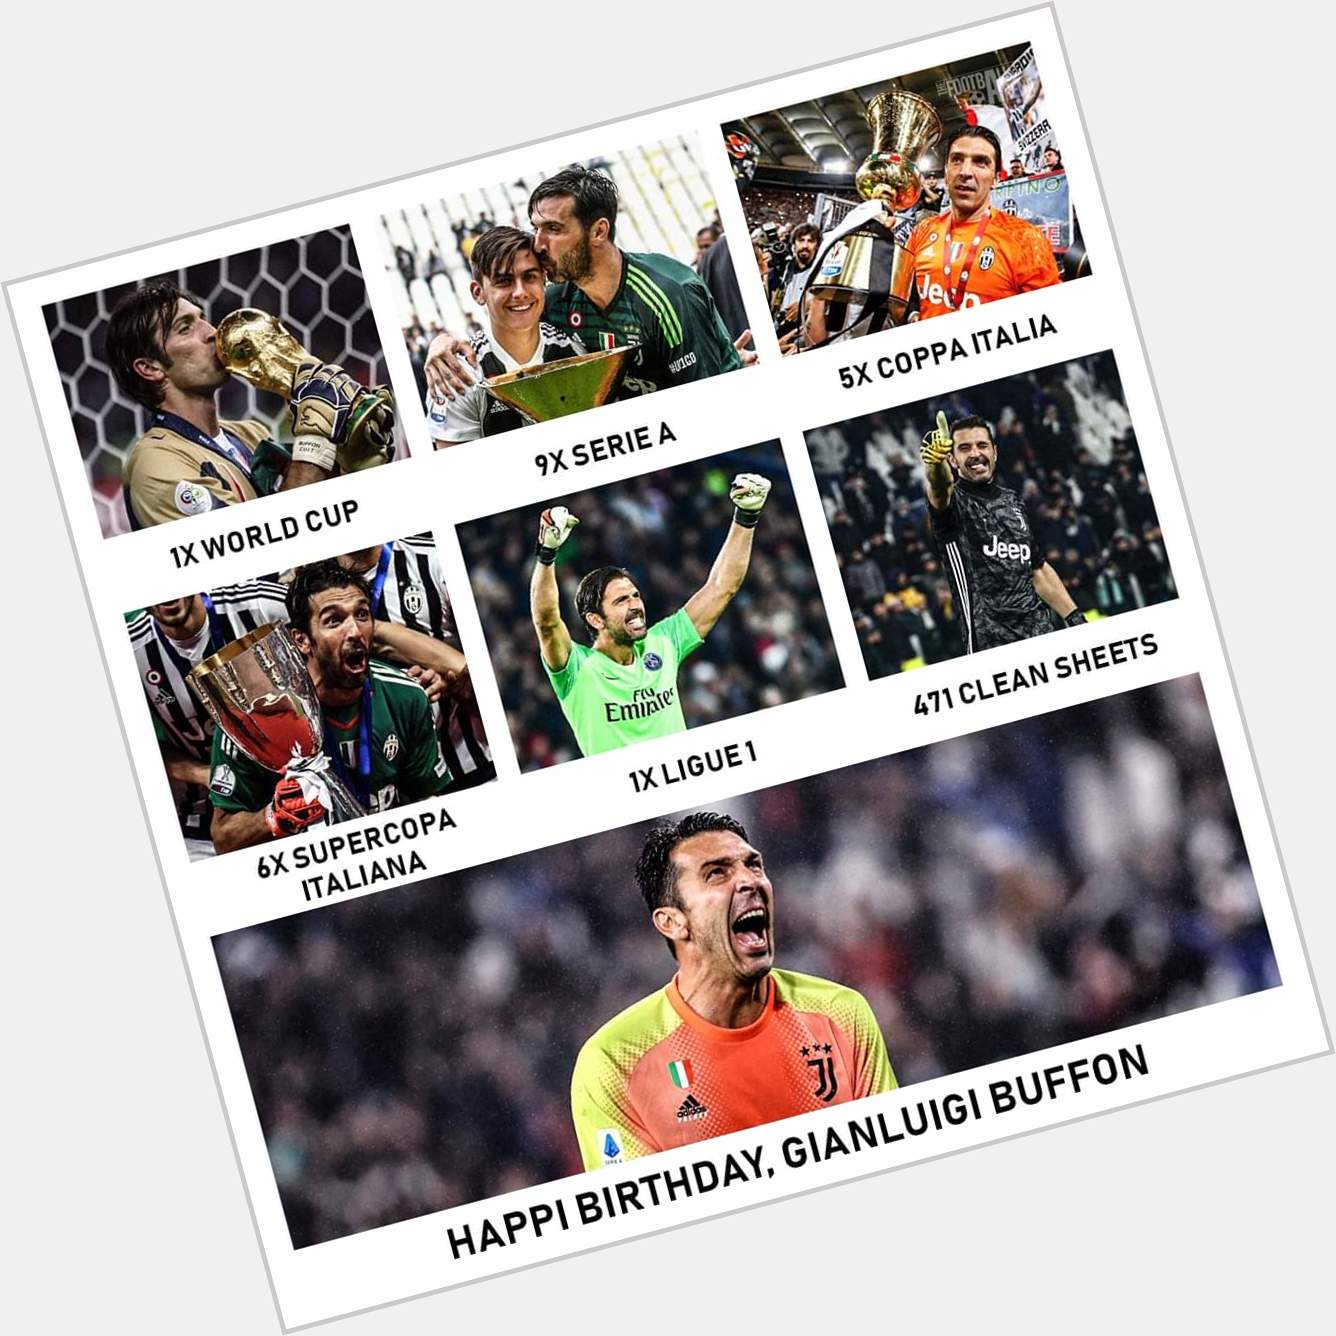 Happy Birthday, Gianluigi Buffon  